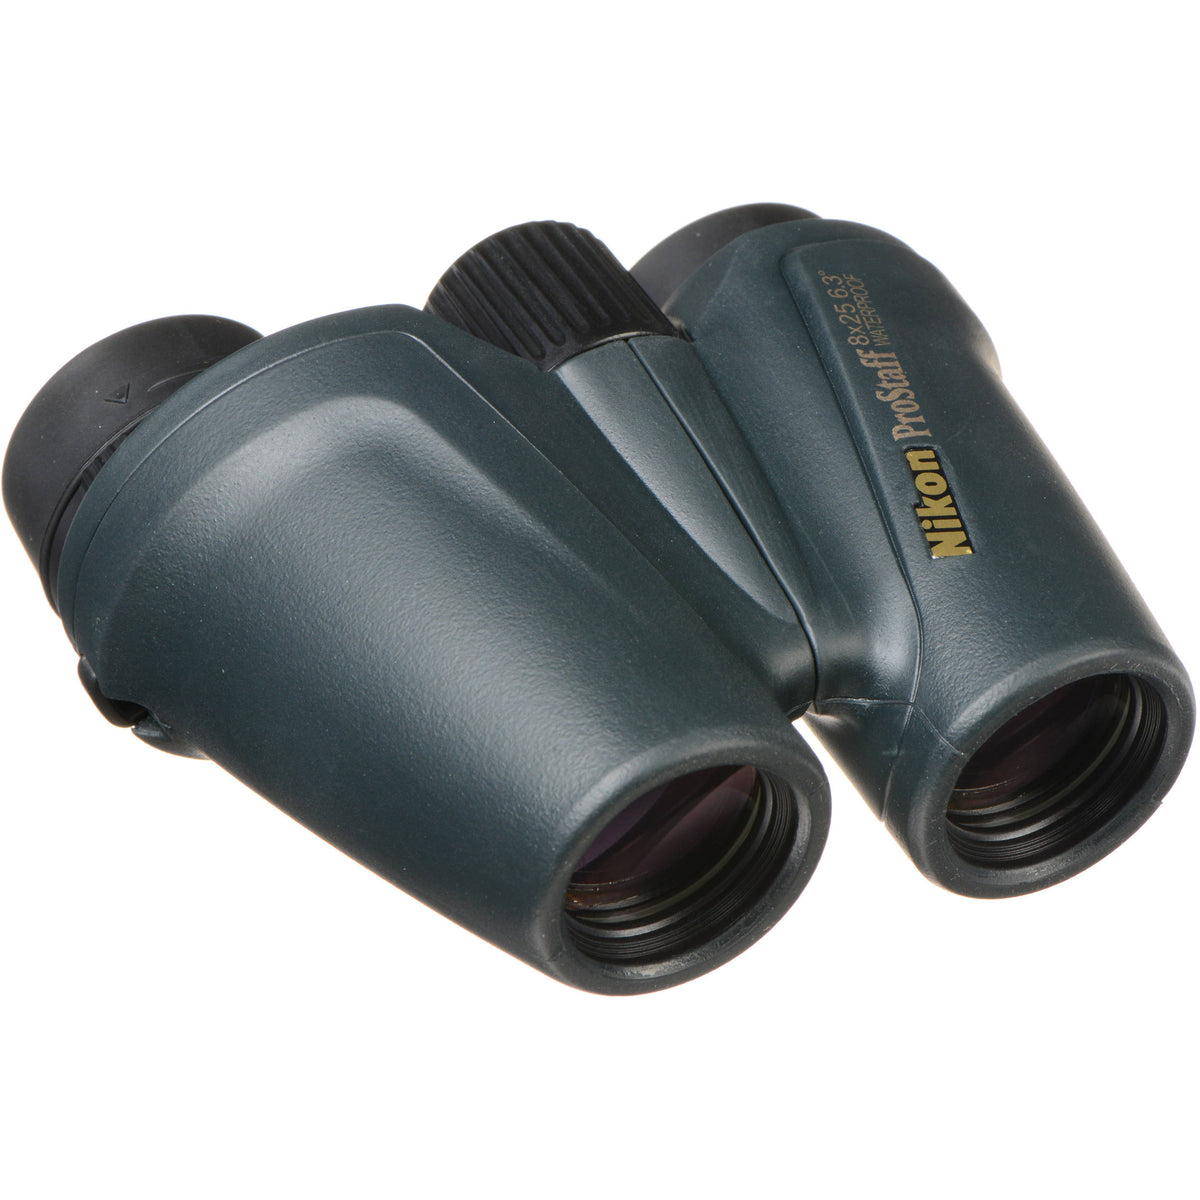 Nikon Prostaff ATB Binoculars